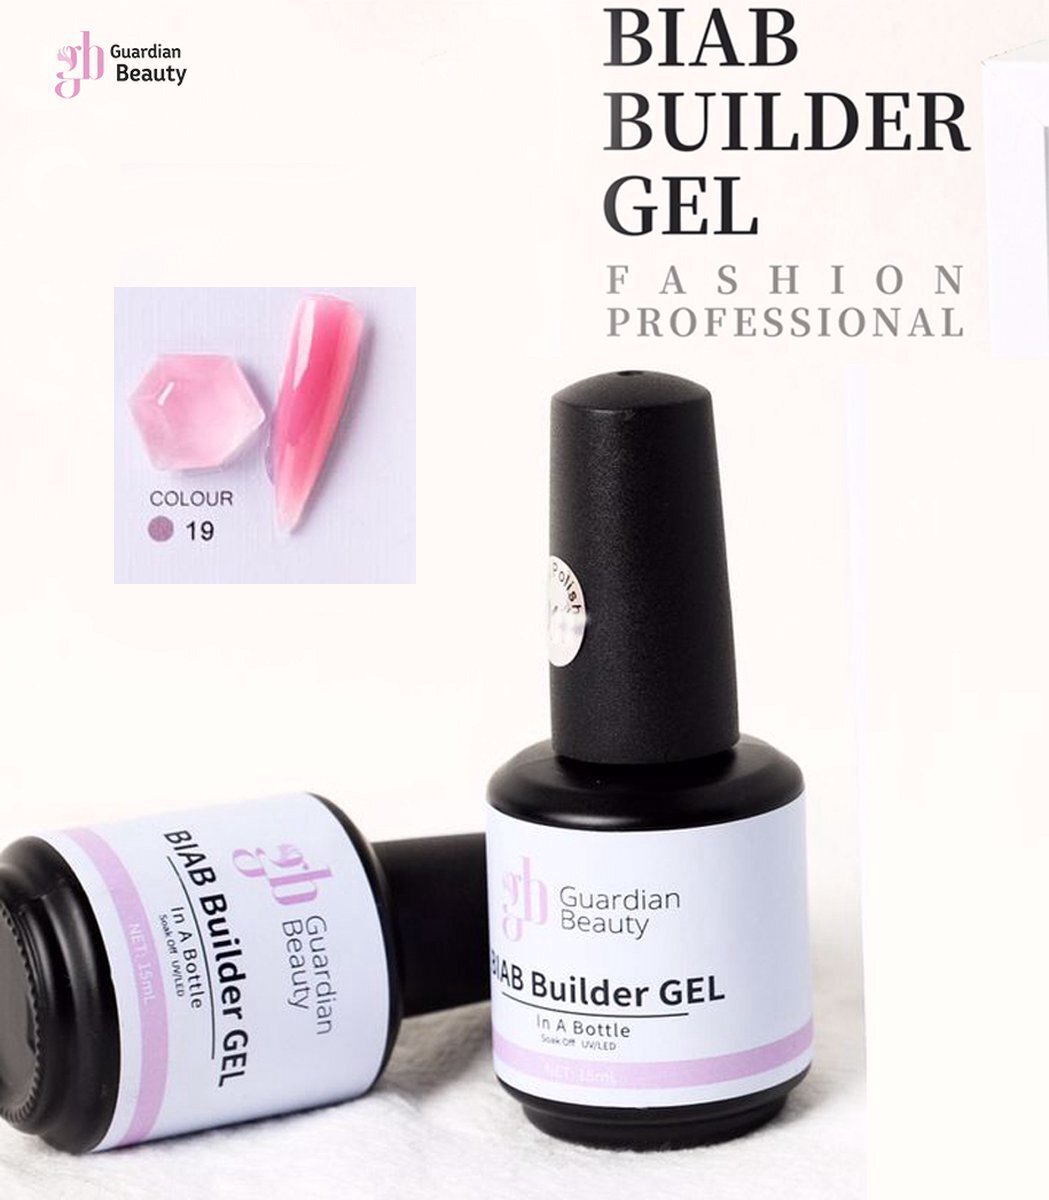 Guardian Beauty Nagel Gellak - Biab Builder gel #19 - Gellex - Absolute Builder gel - Aphrodite | BIAB Nail Gel 15ml